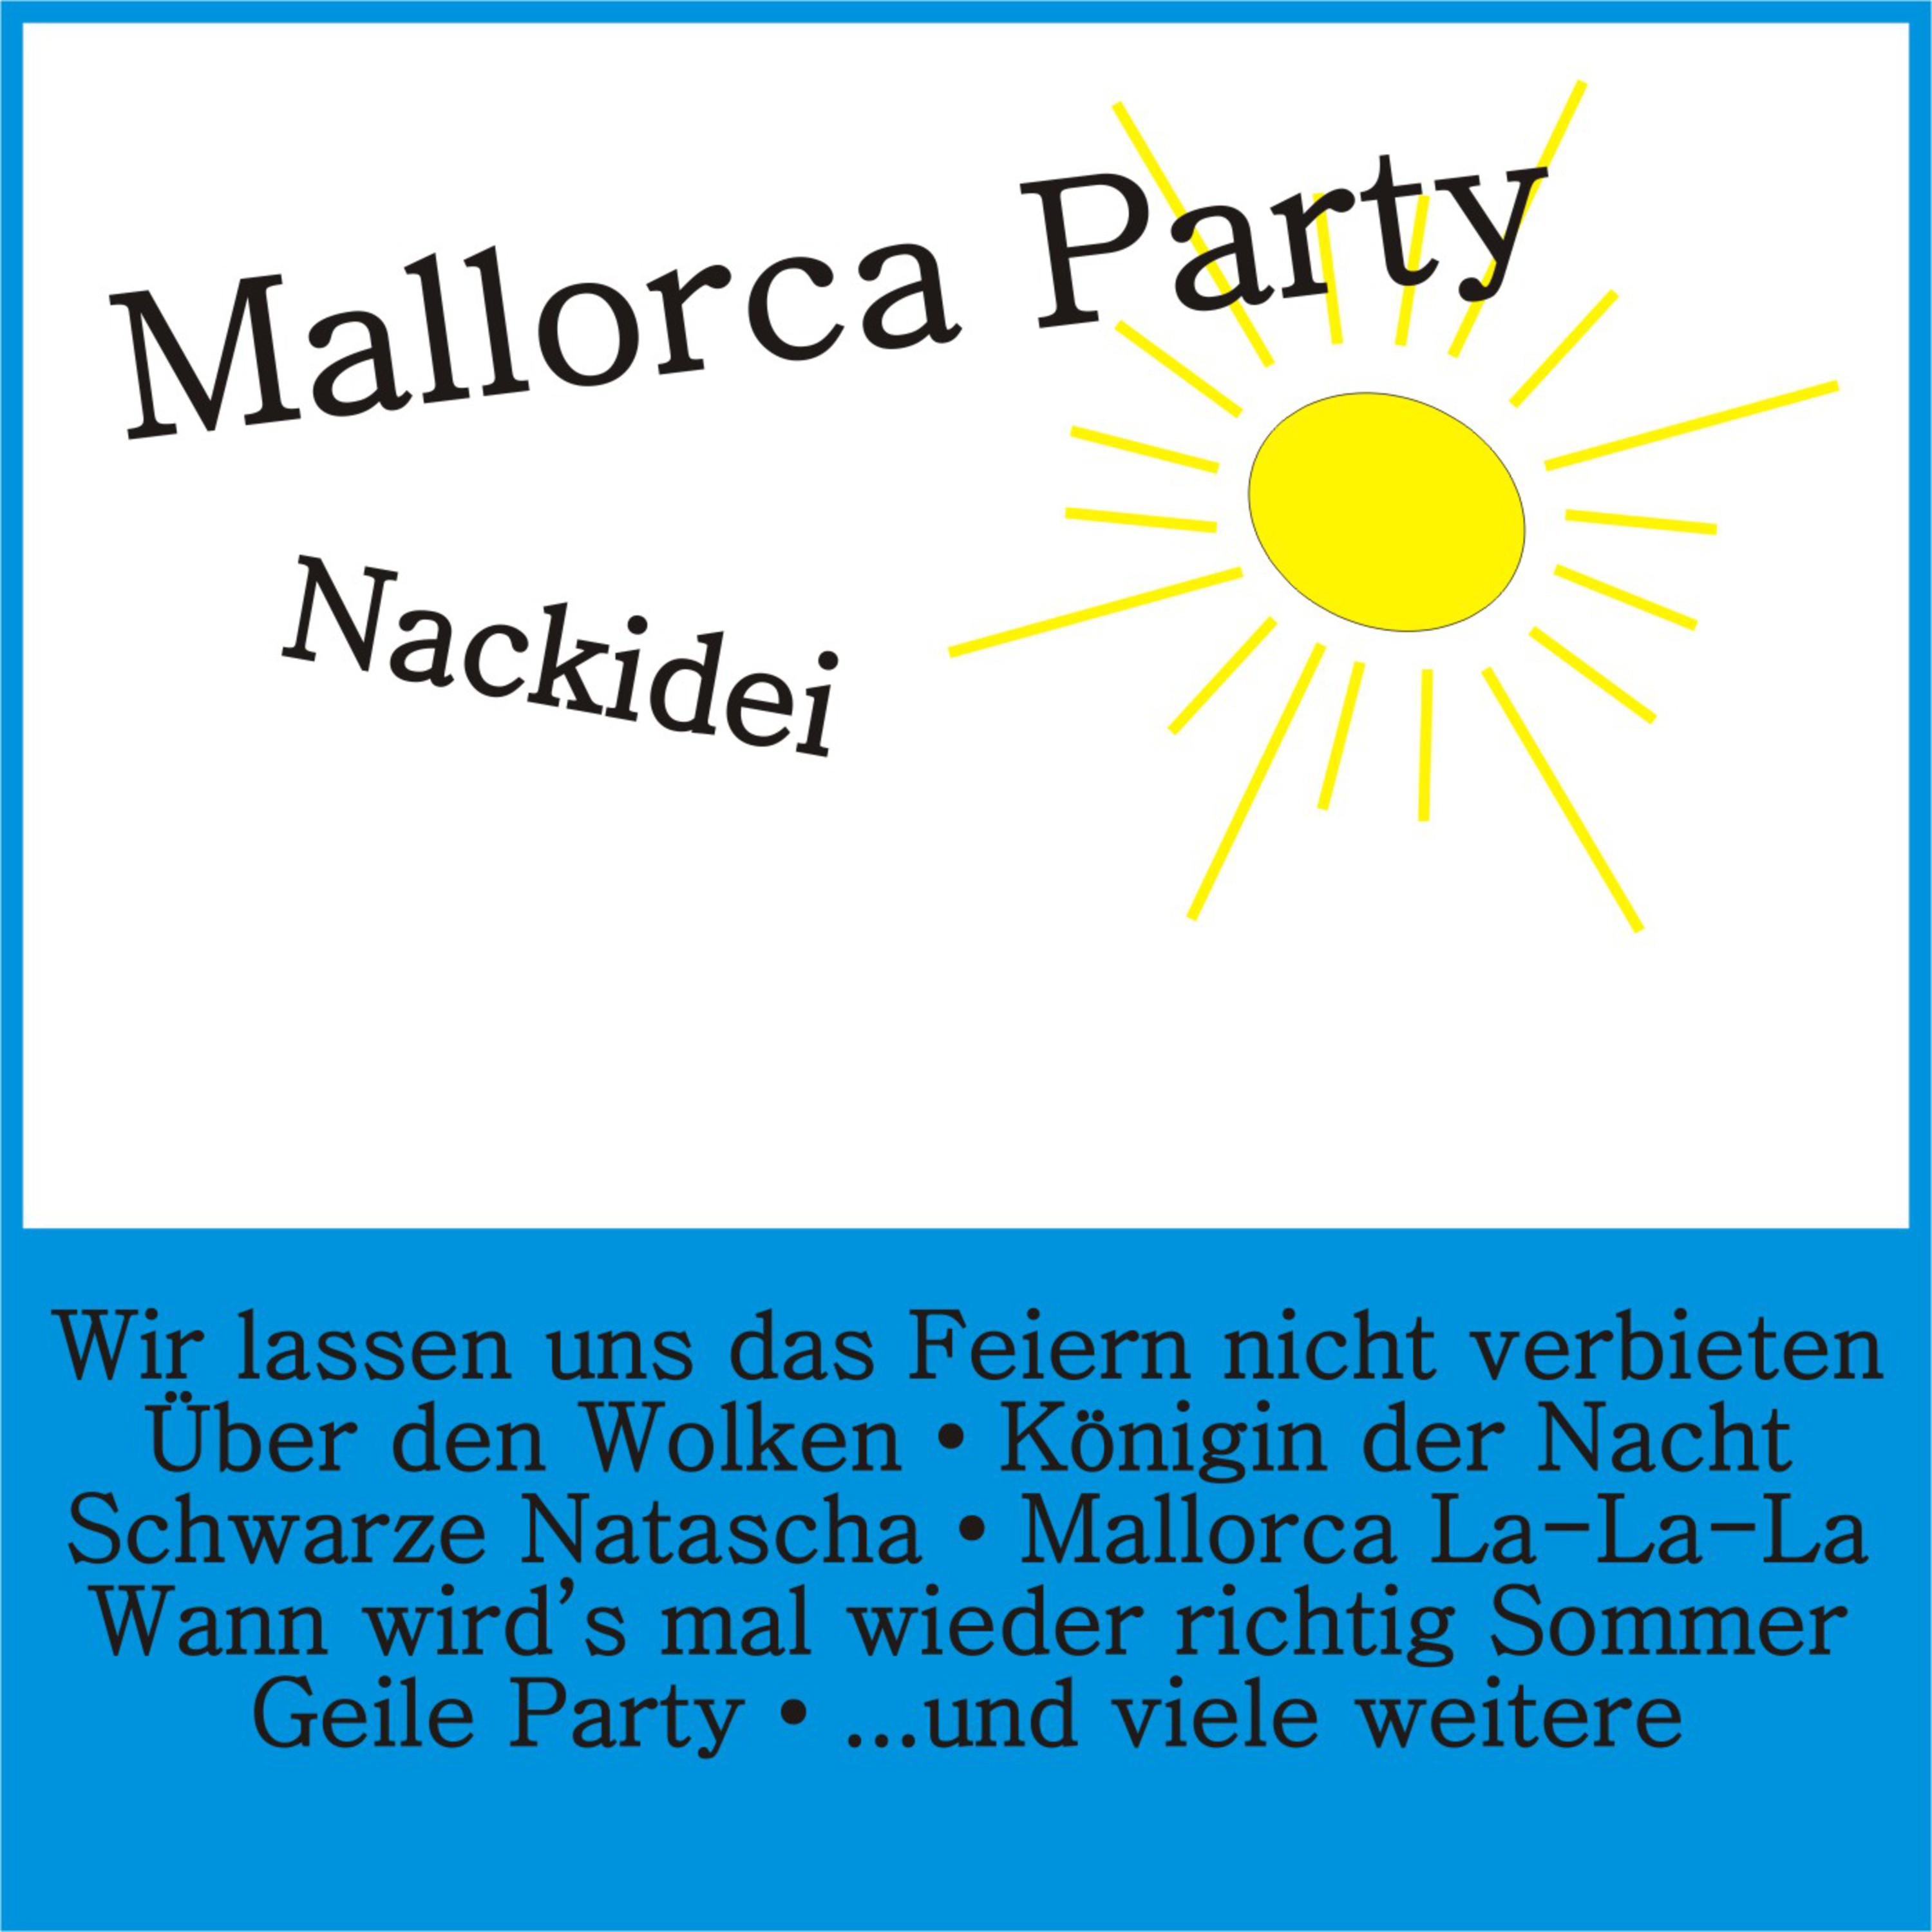 Mallorca Party - Nackidei